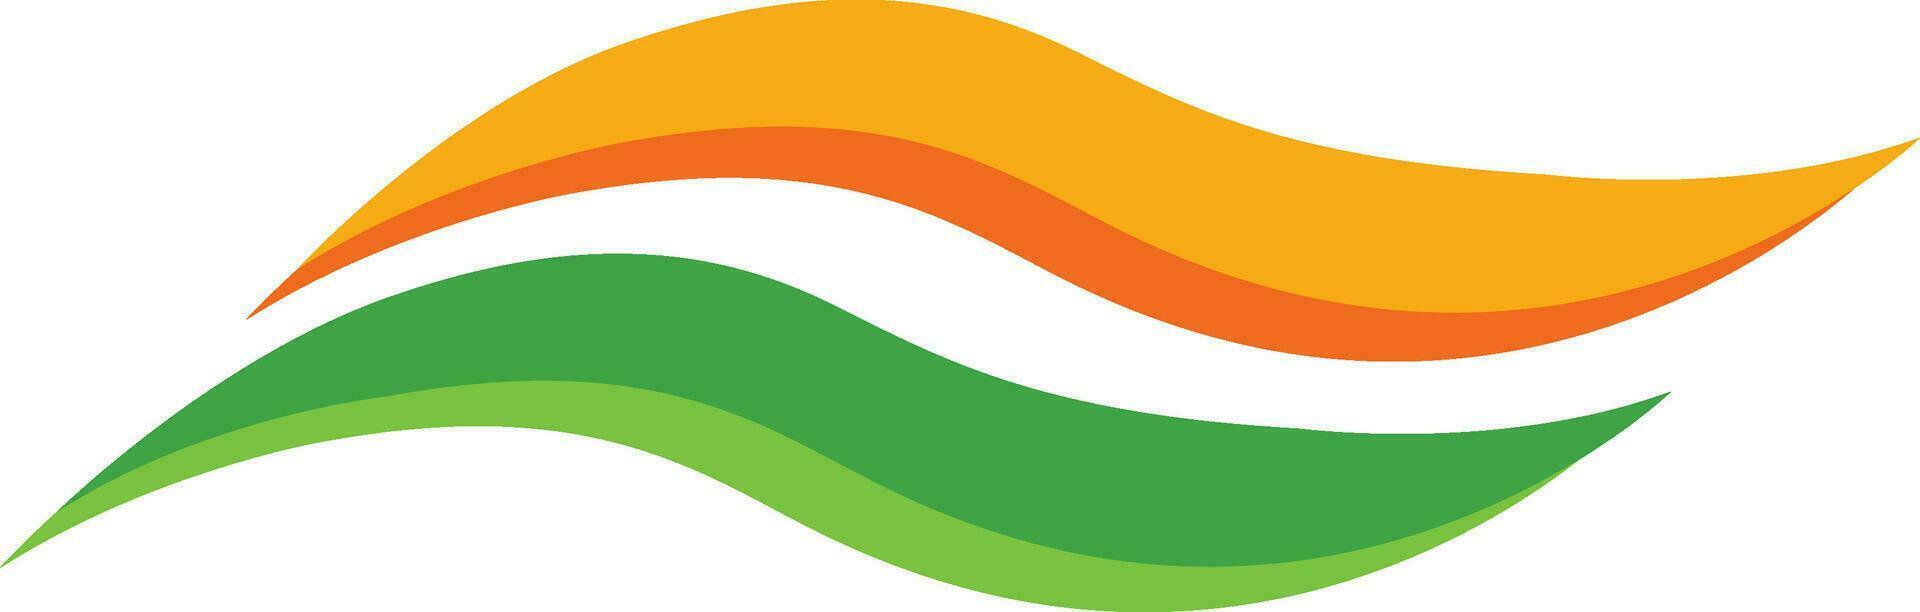 Indian flag color waves for Republic Day celebration. vector